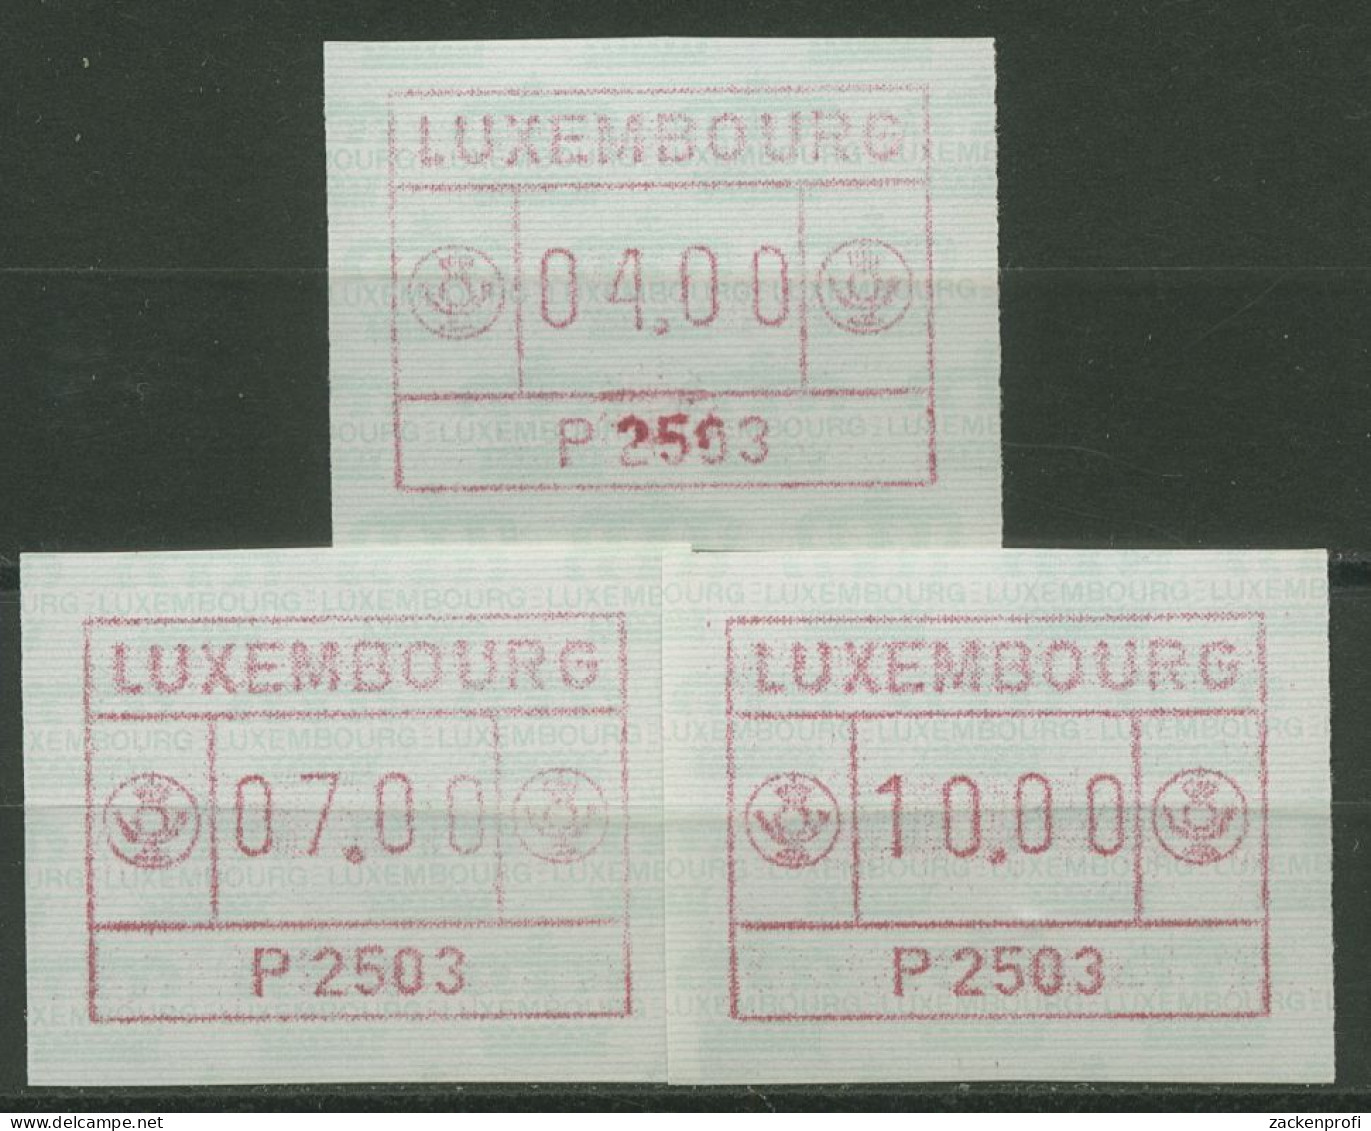 Luxemburg 1983 Automatenmarke Automat P 2503 Satz 1.3 B S1 Postfrisch - Vignettes D'affranchissement